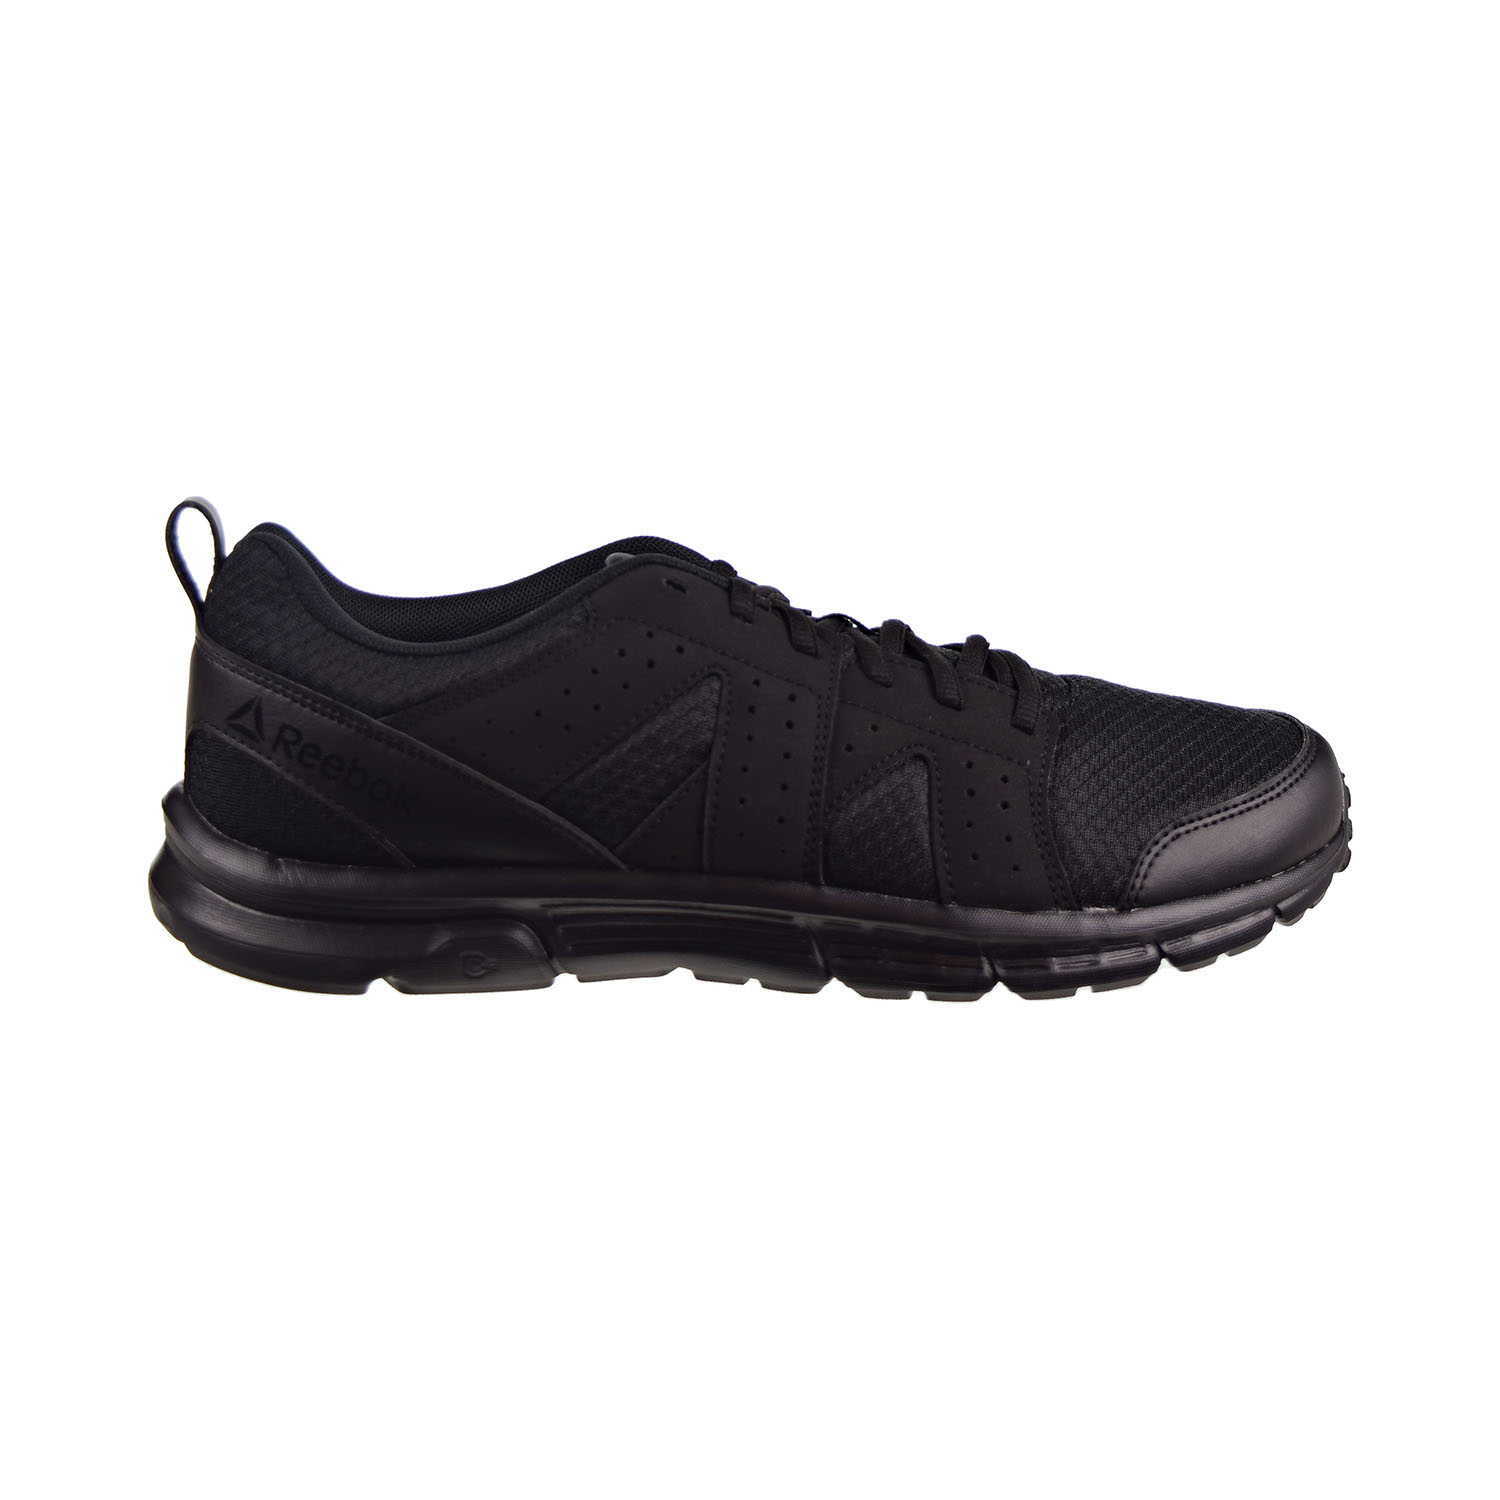 Reebok Rise Supreme RG Men's Running Shoes Black-Black CN4421 | eBay